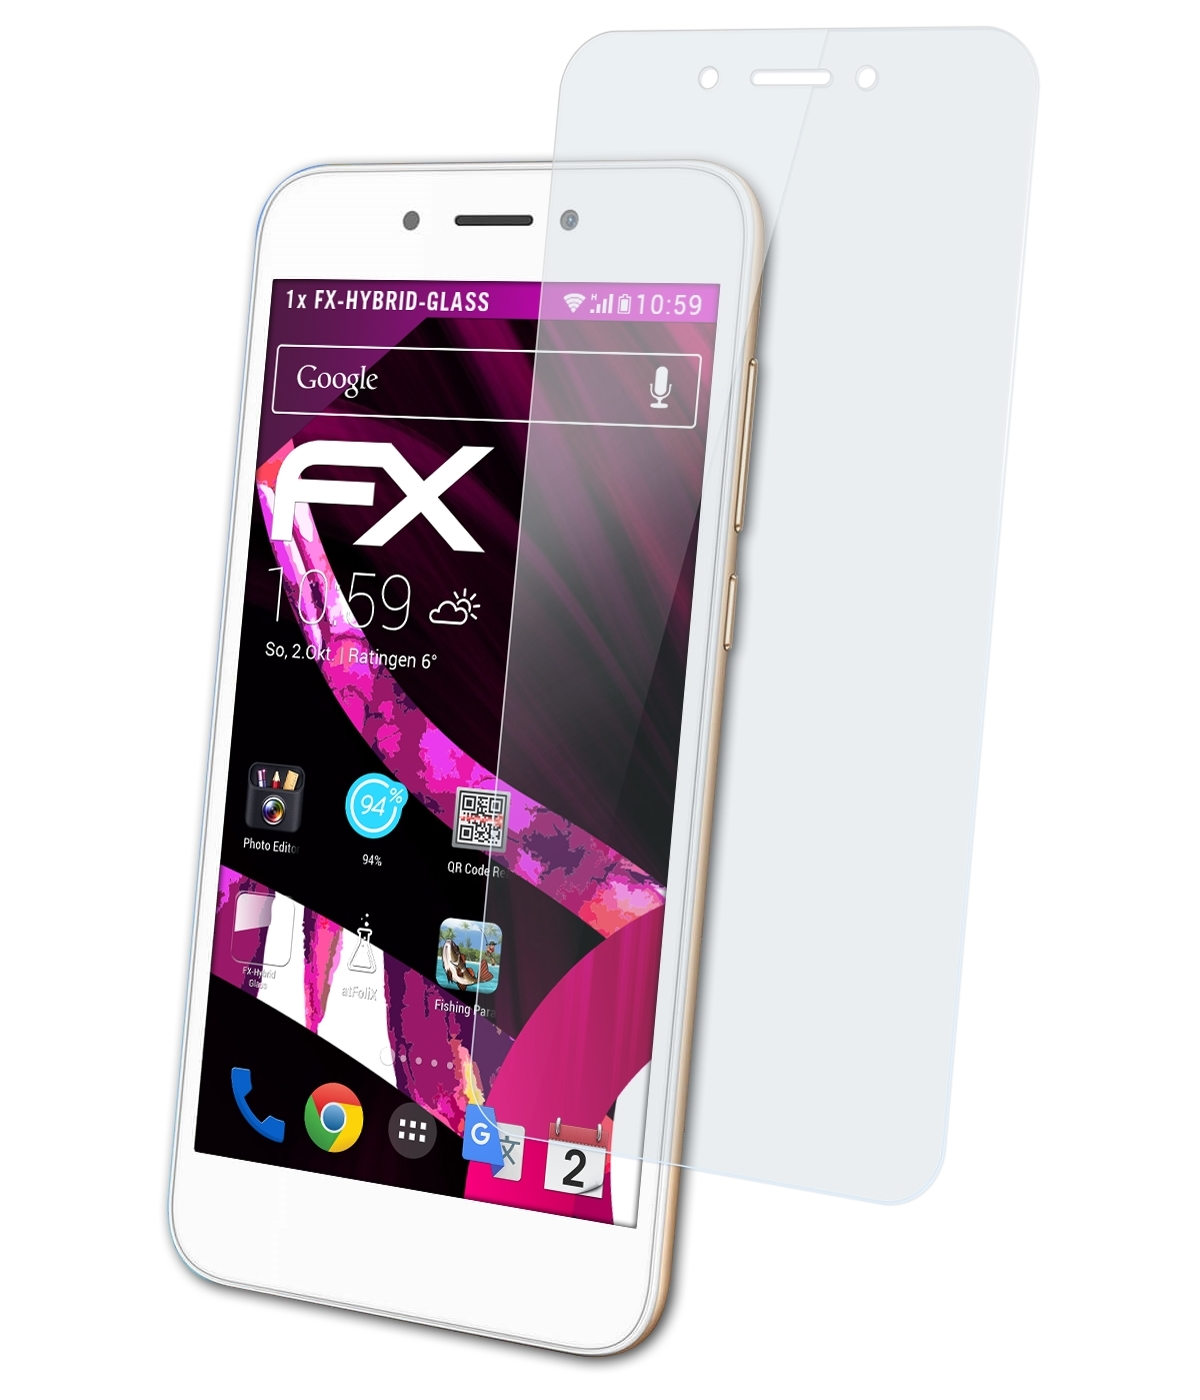 Huawei 6A) Honor Schutzglas(für FX-Hybrid-Glass ATFOLIX